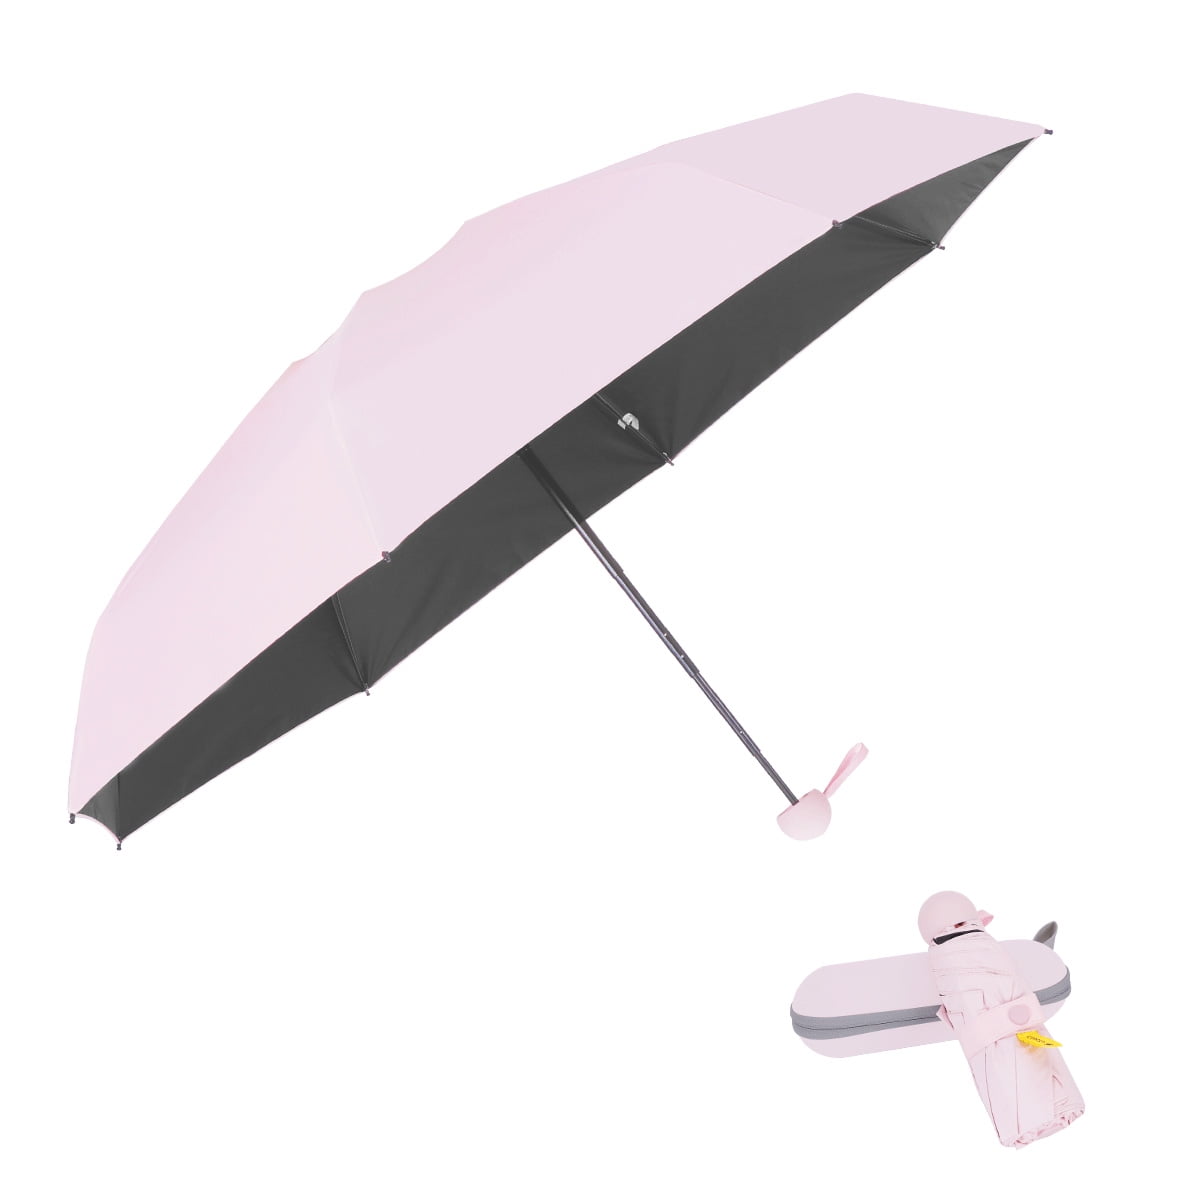 Fashion Mini Folding Compact Umbrella Light Travel Parasol for Sunny Rainy Days 